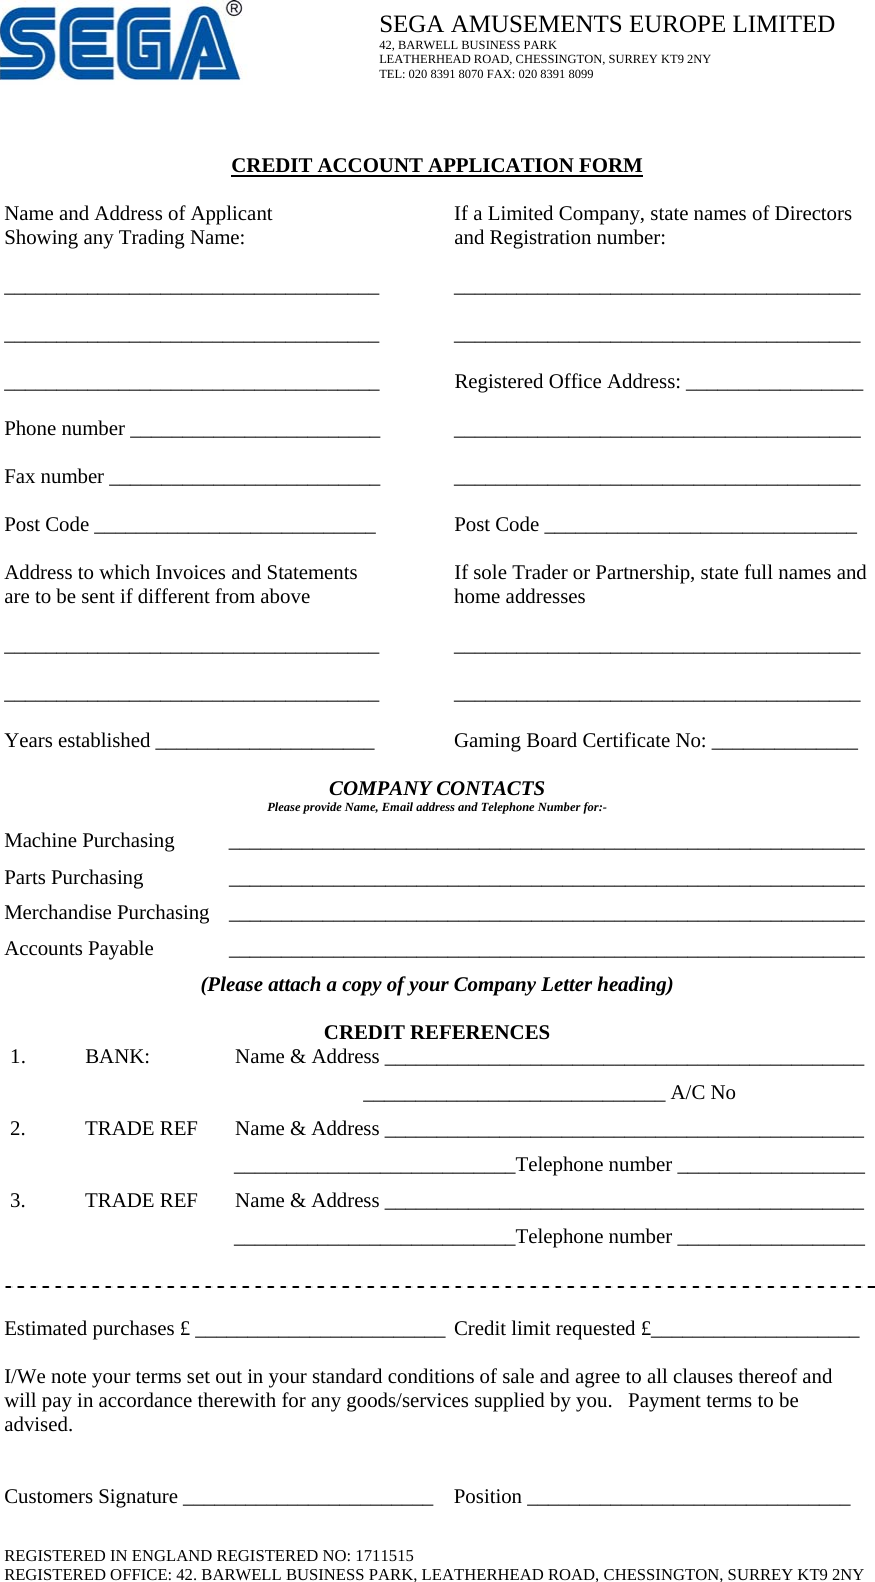 Page 1 of 3 - Arcade Credit Application Form 0 - Paula User Manual